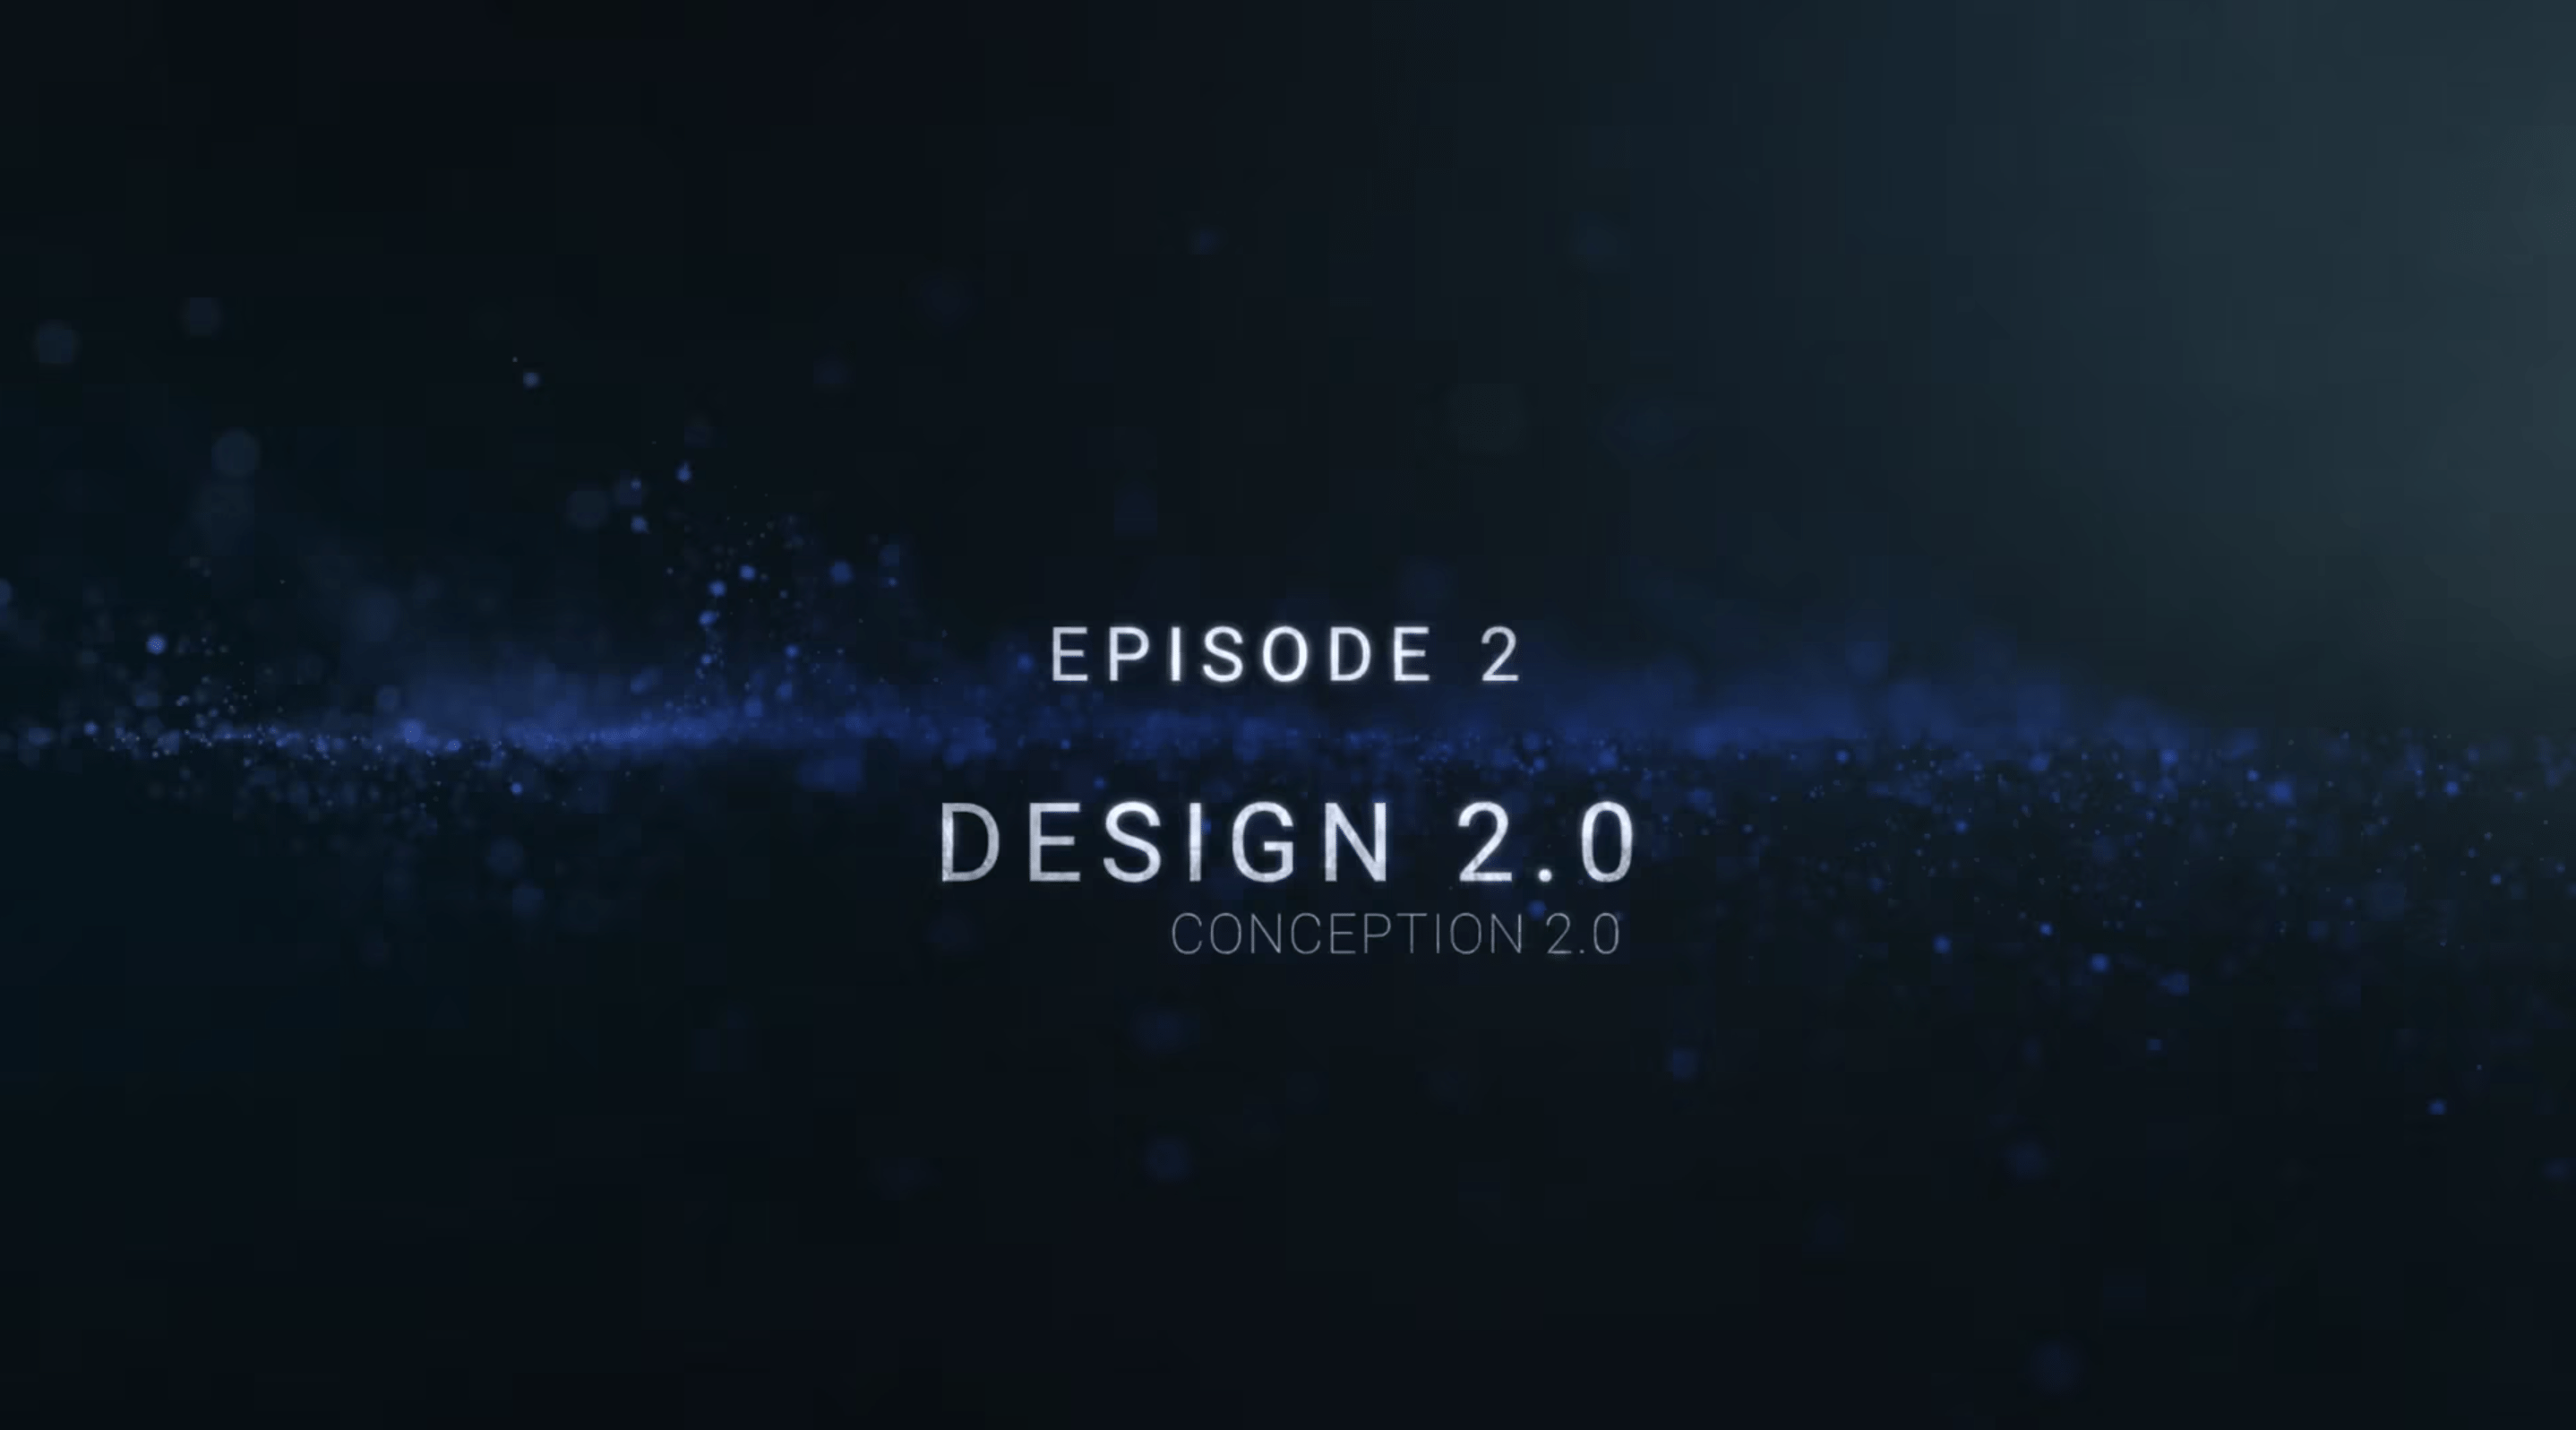 #360° - Episode 2 “Conception 2.0 _ Design 2.0”